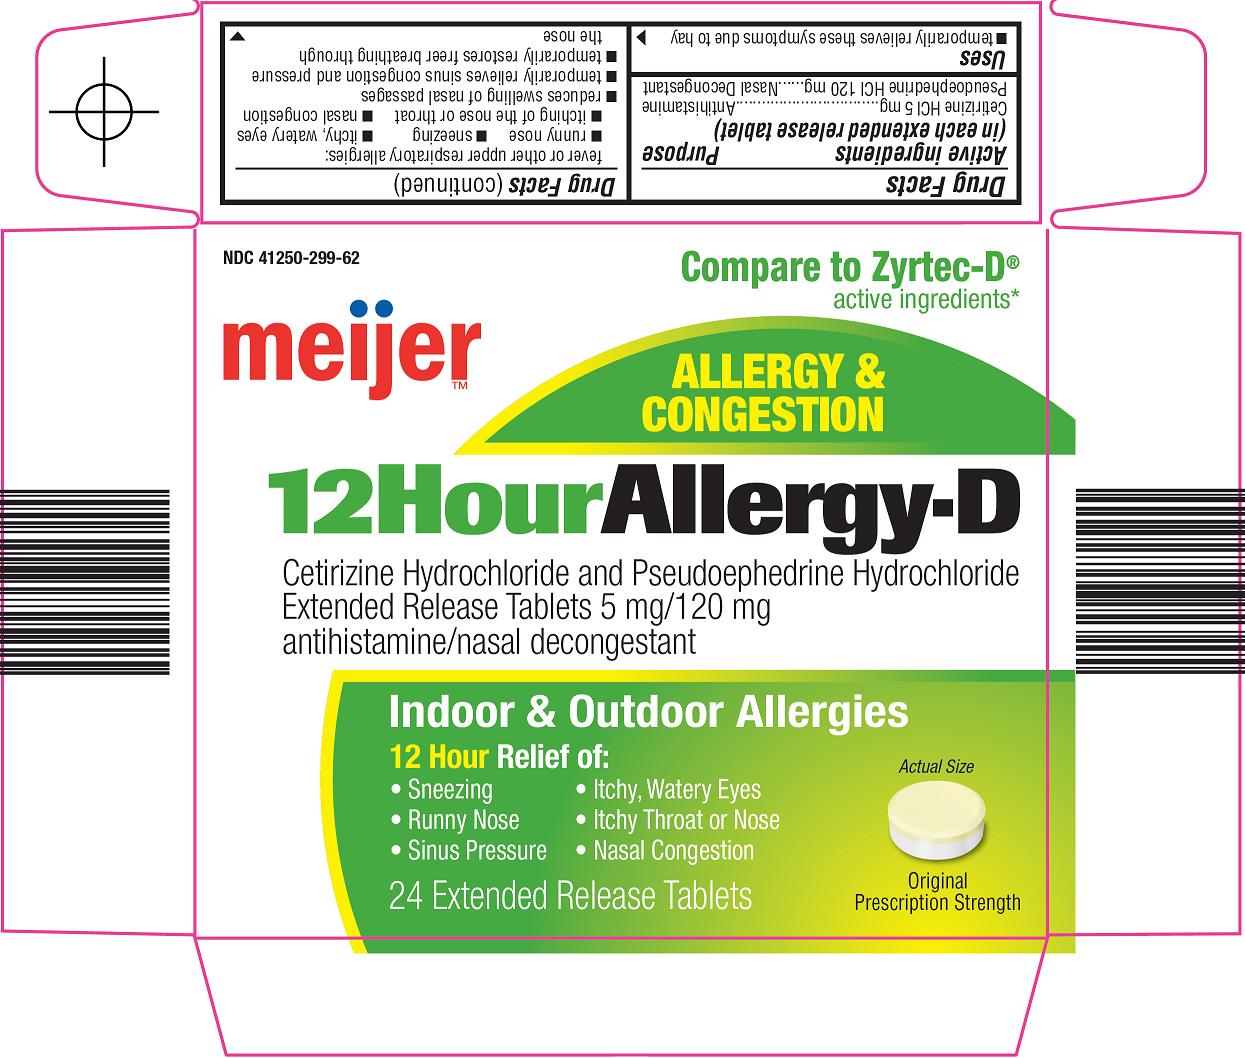 12 Hour Allergy D Carton Image 1